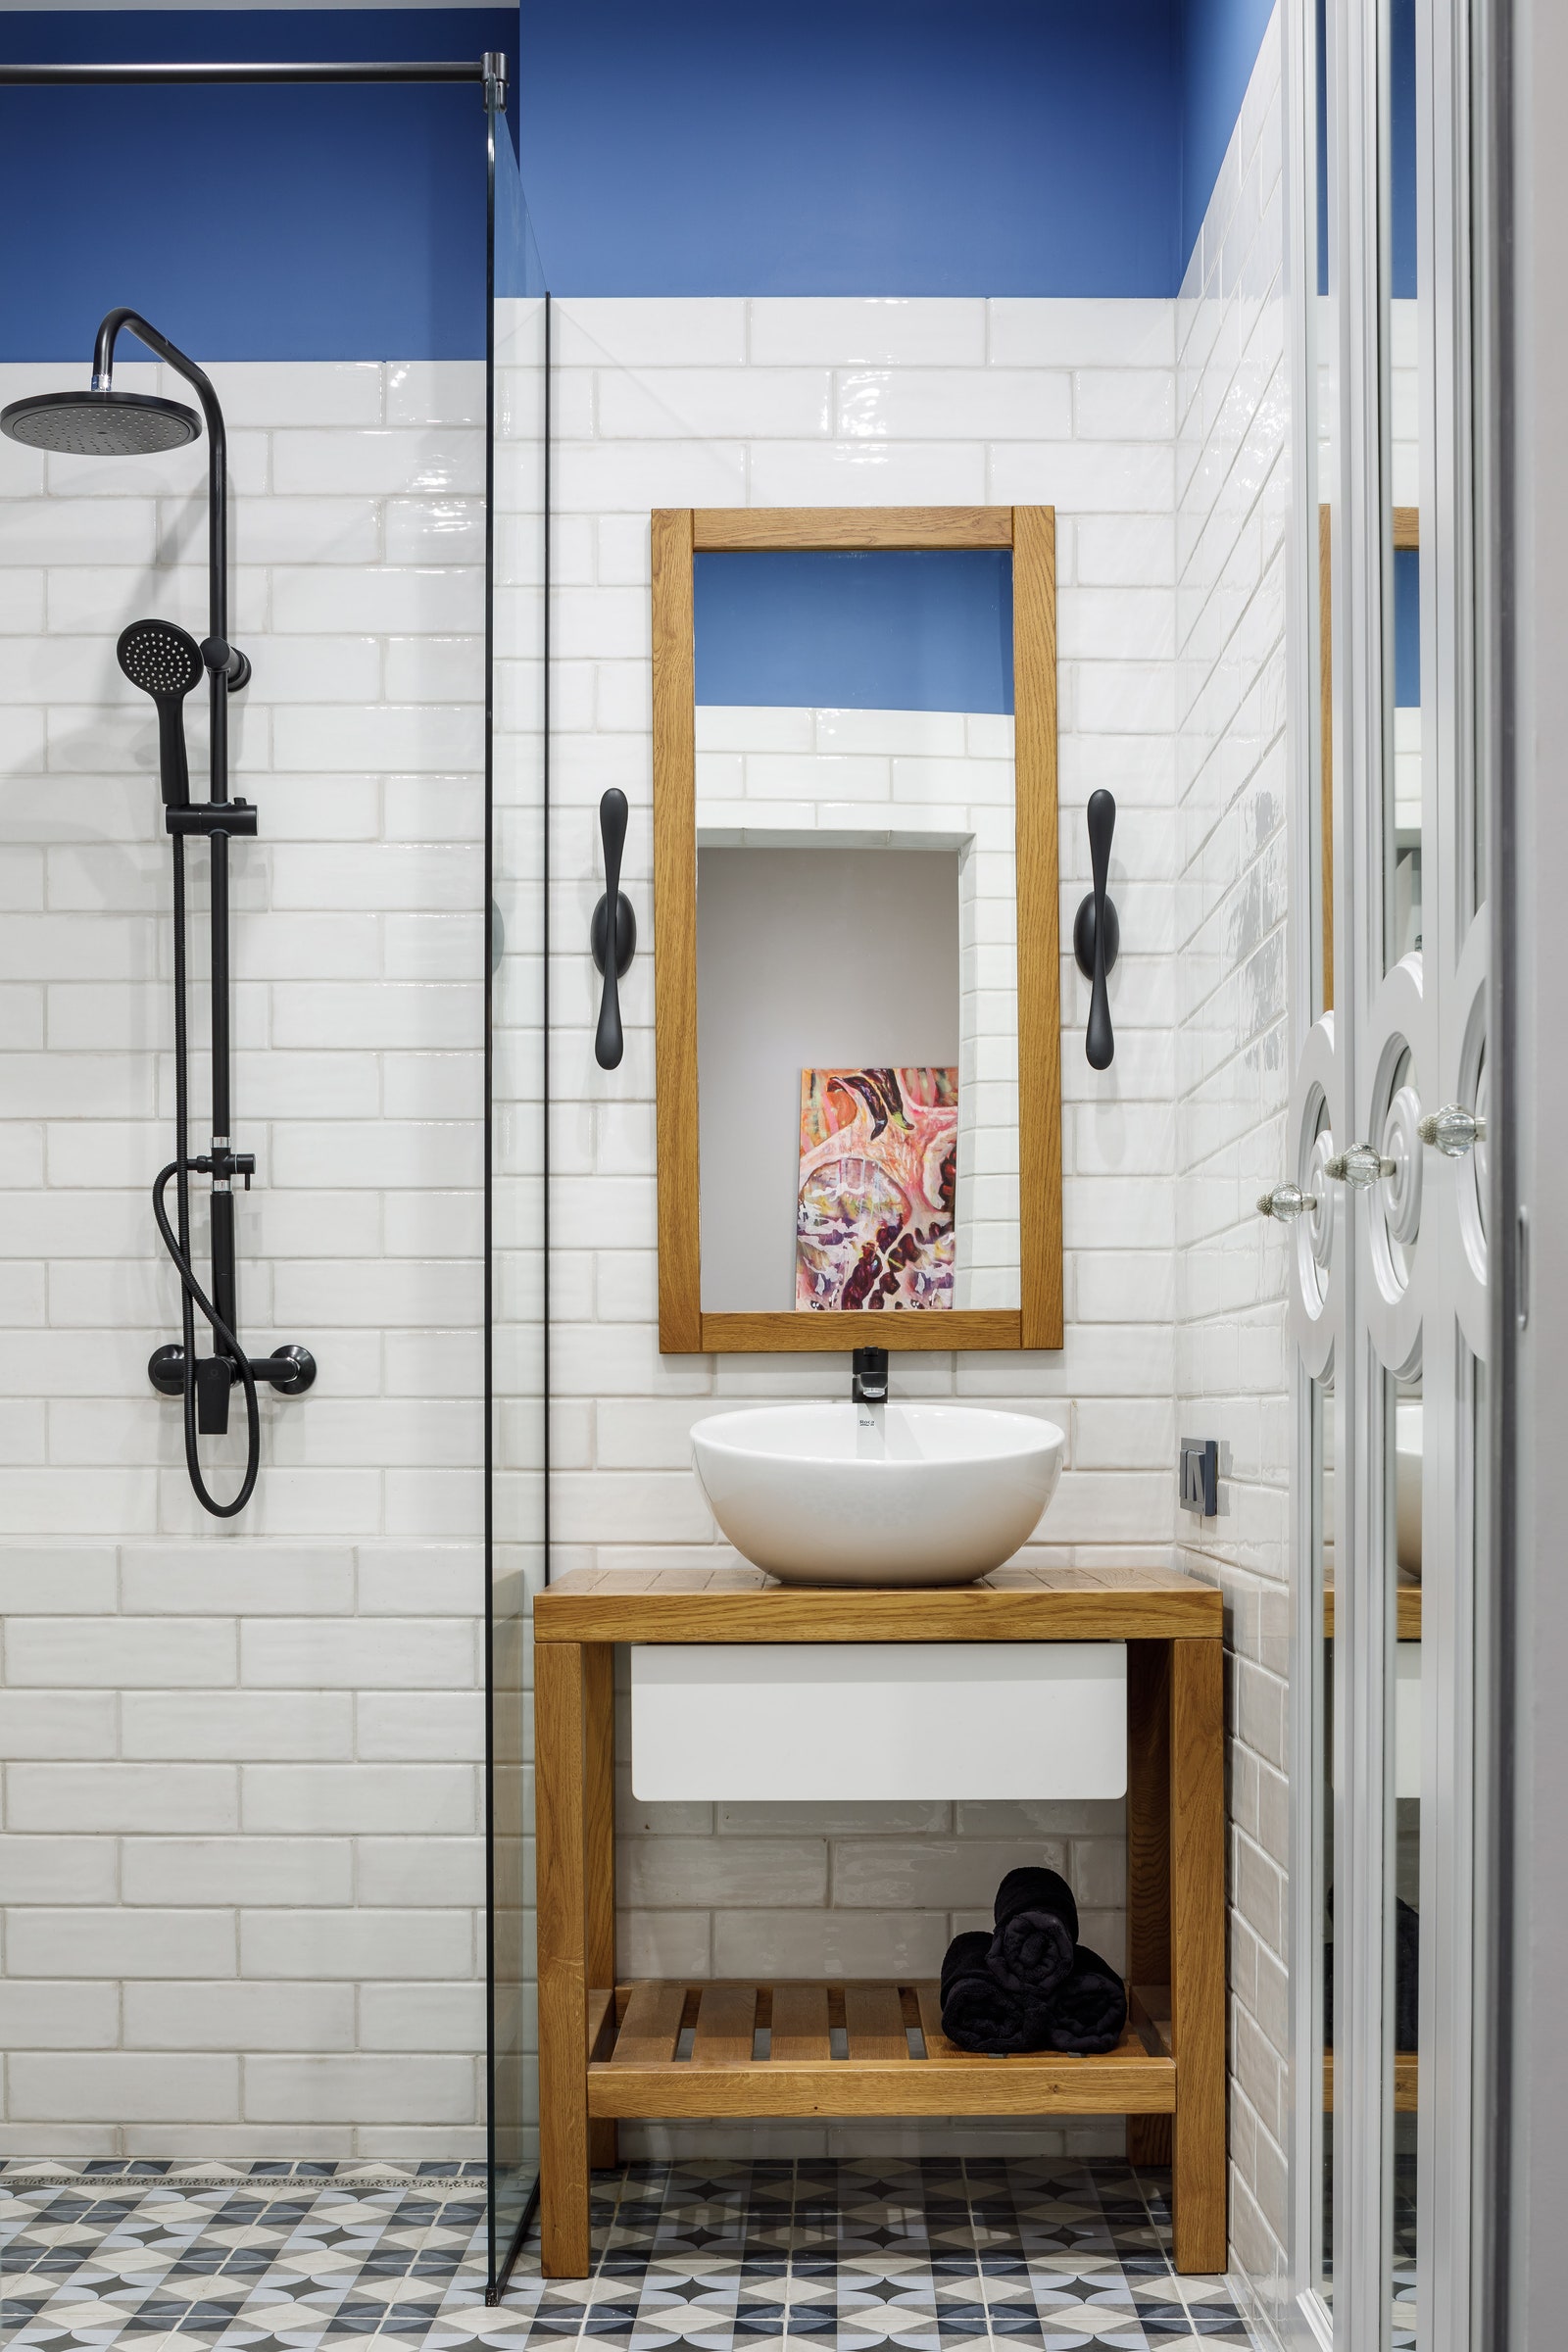 Ванная комната. Тумба зеркало шкафы изготовлены на заказ по эскизам дизайнеров сантехника Ravak плитка напольная Equipe.